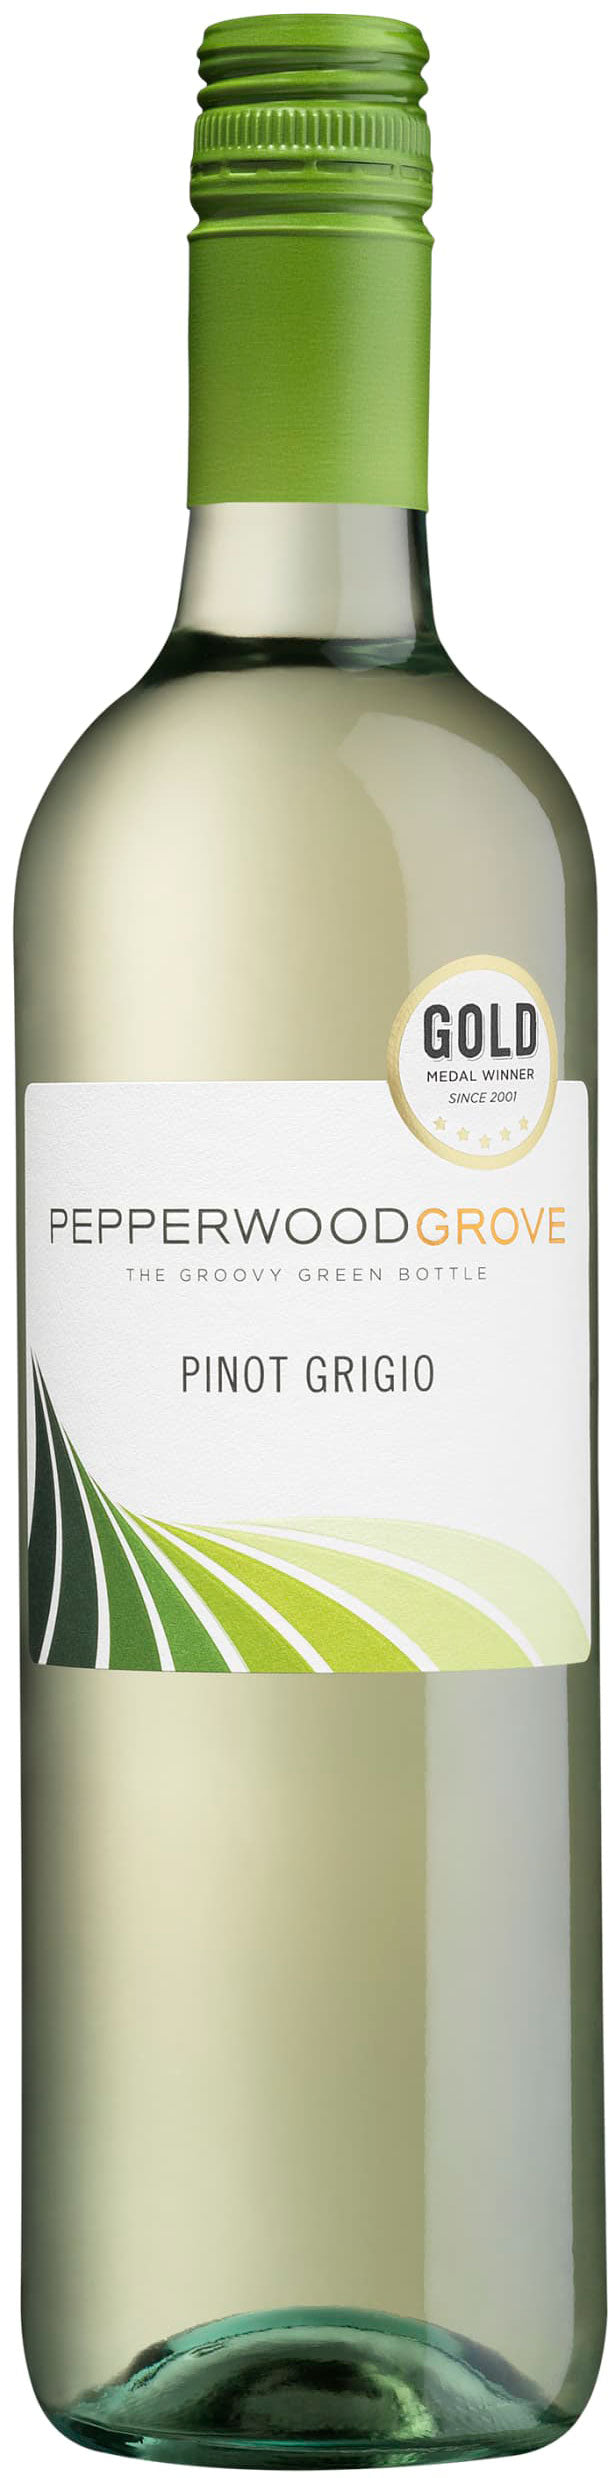 Pepperwood Grove Pinot Grigio